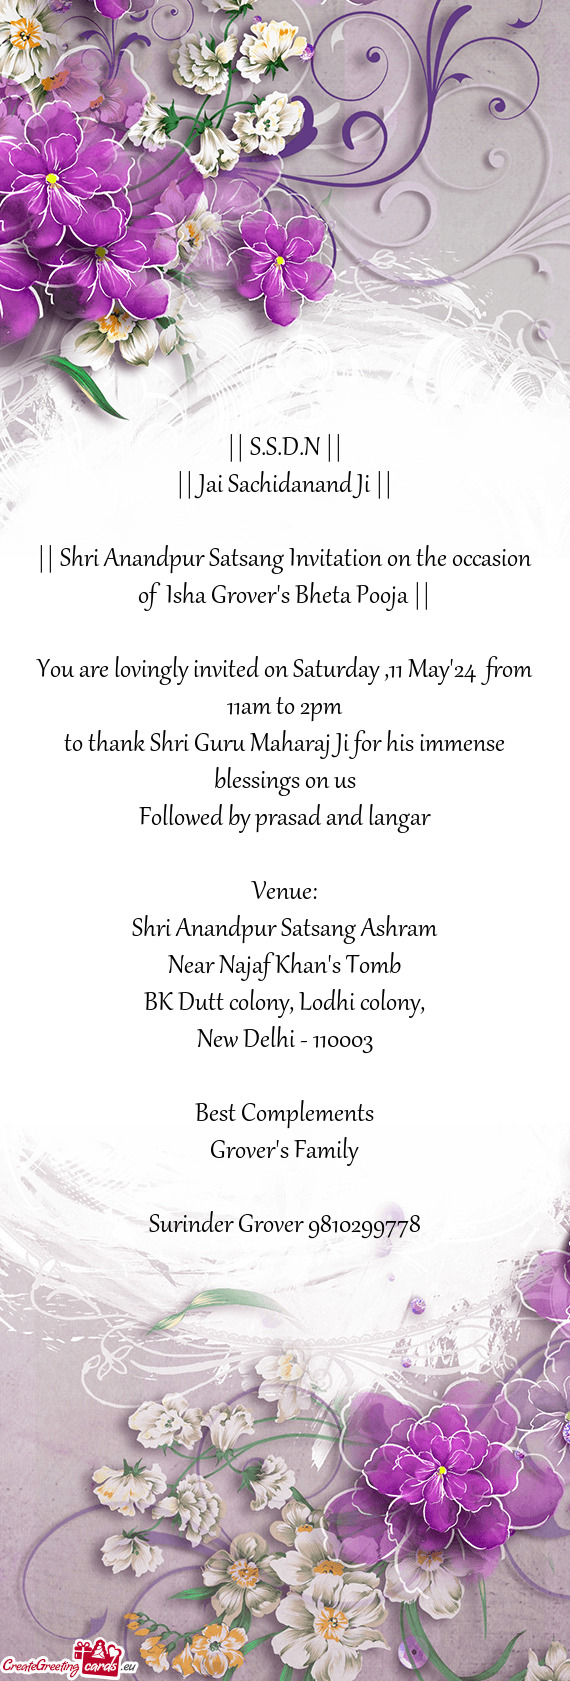 || Shri Anandpur Satsang Invitation on the occasion of Isha Grover's Bheta Pooja ||